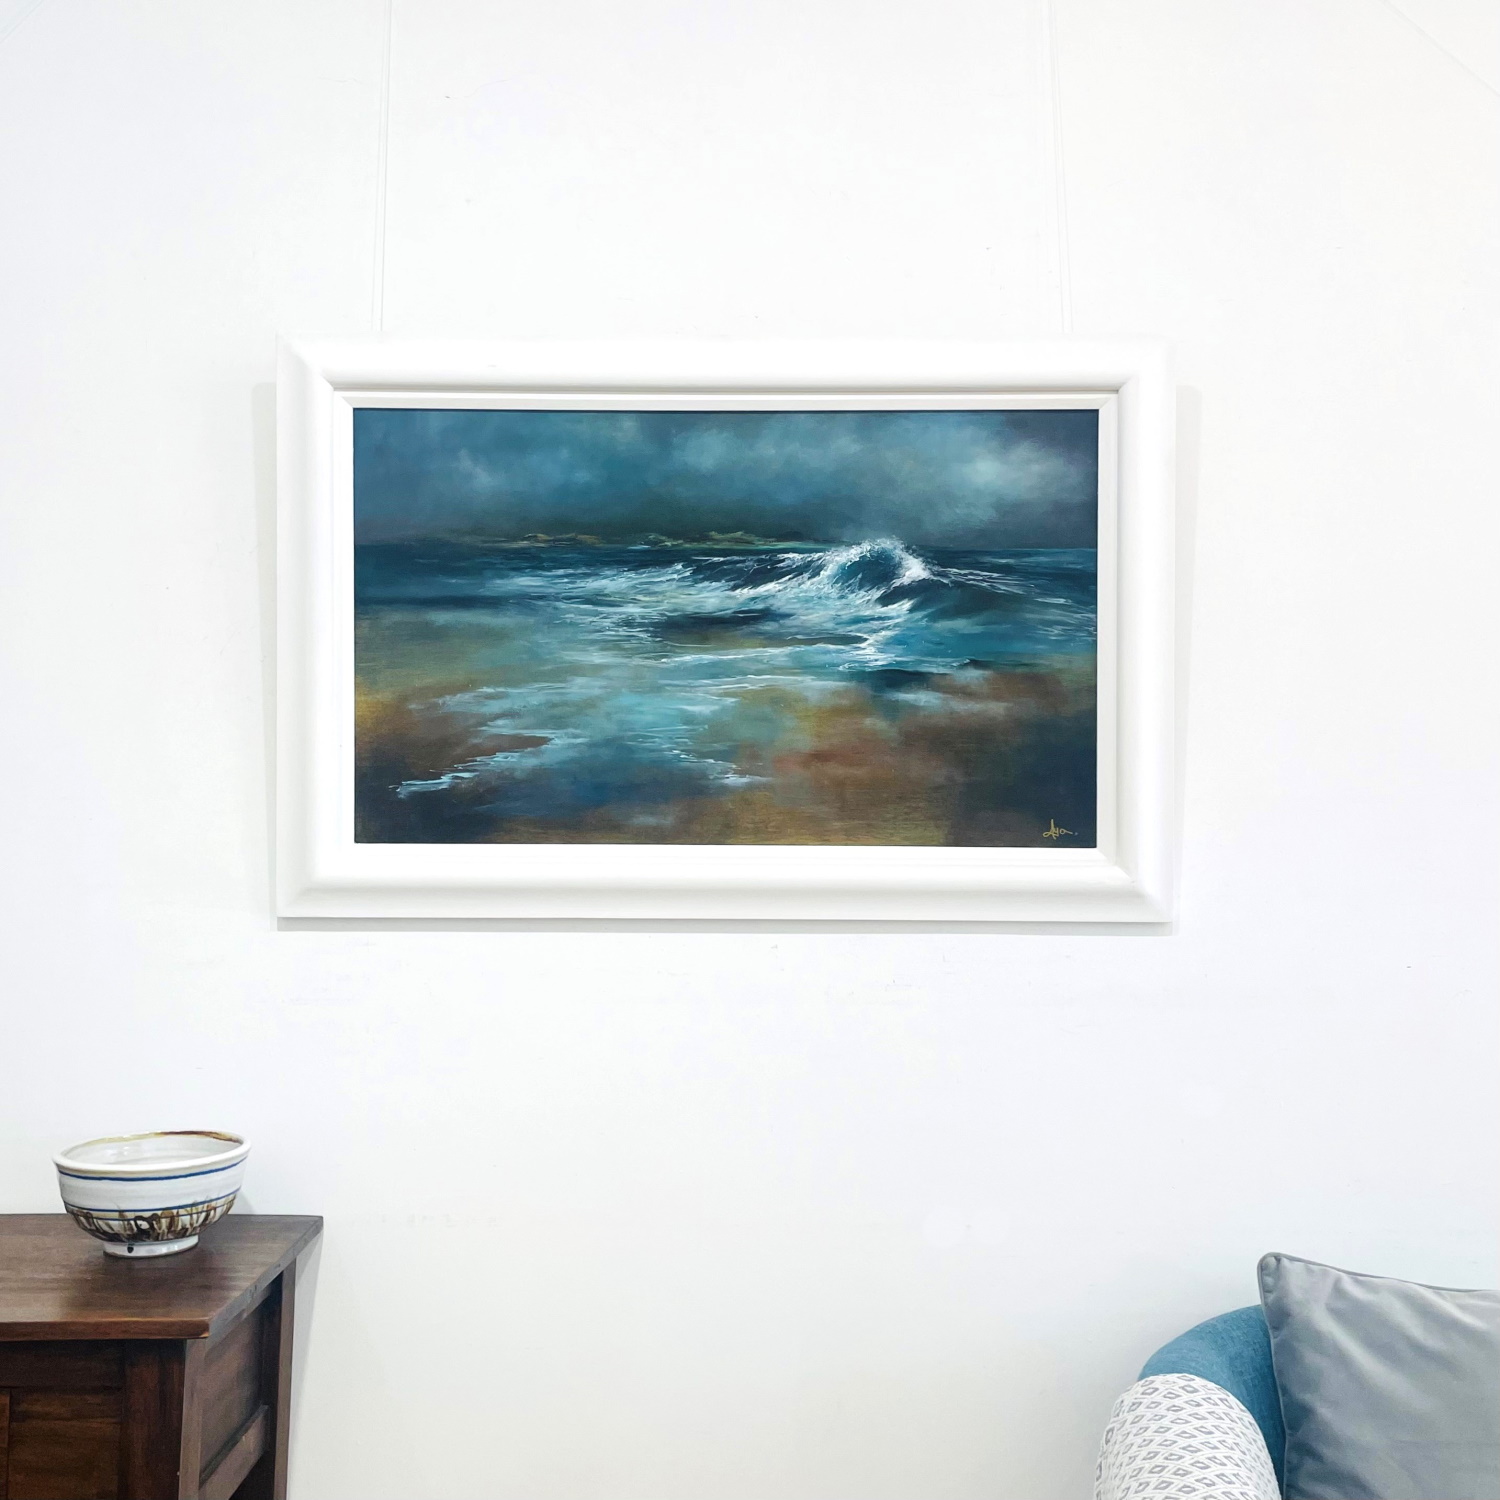 'Reaching Shore, Seamill' by artist Alison Lyon